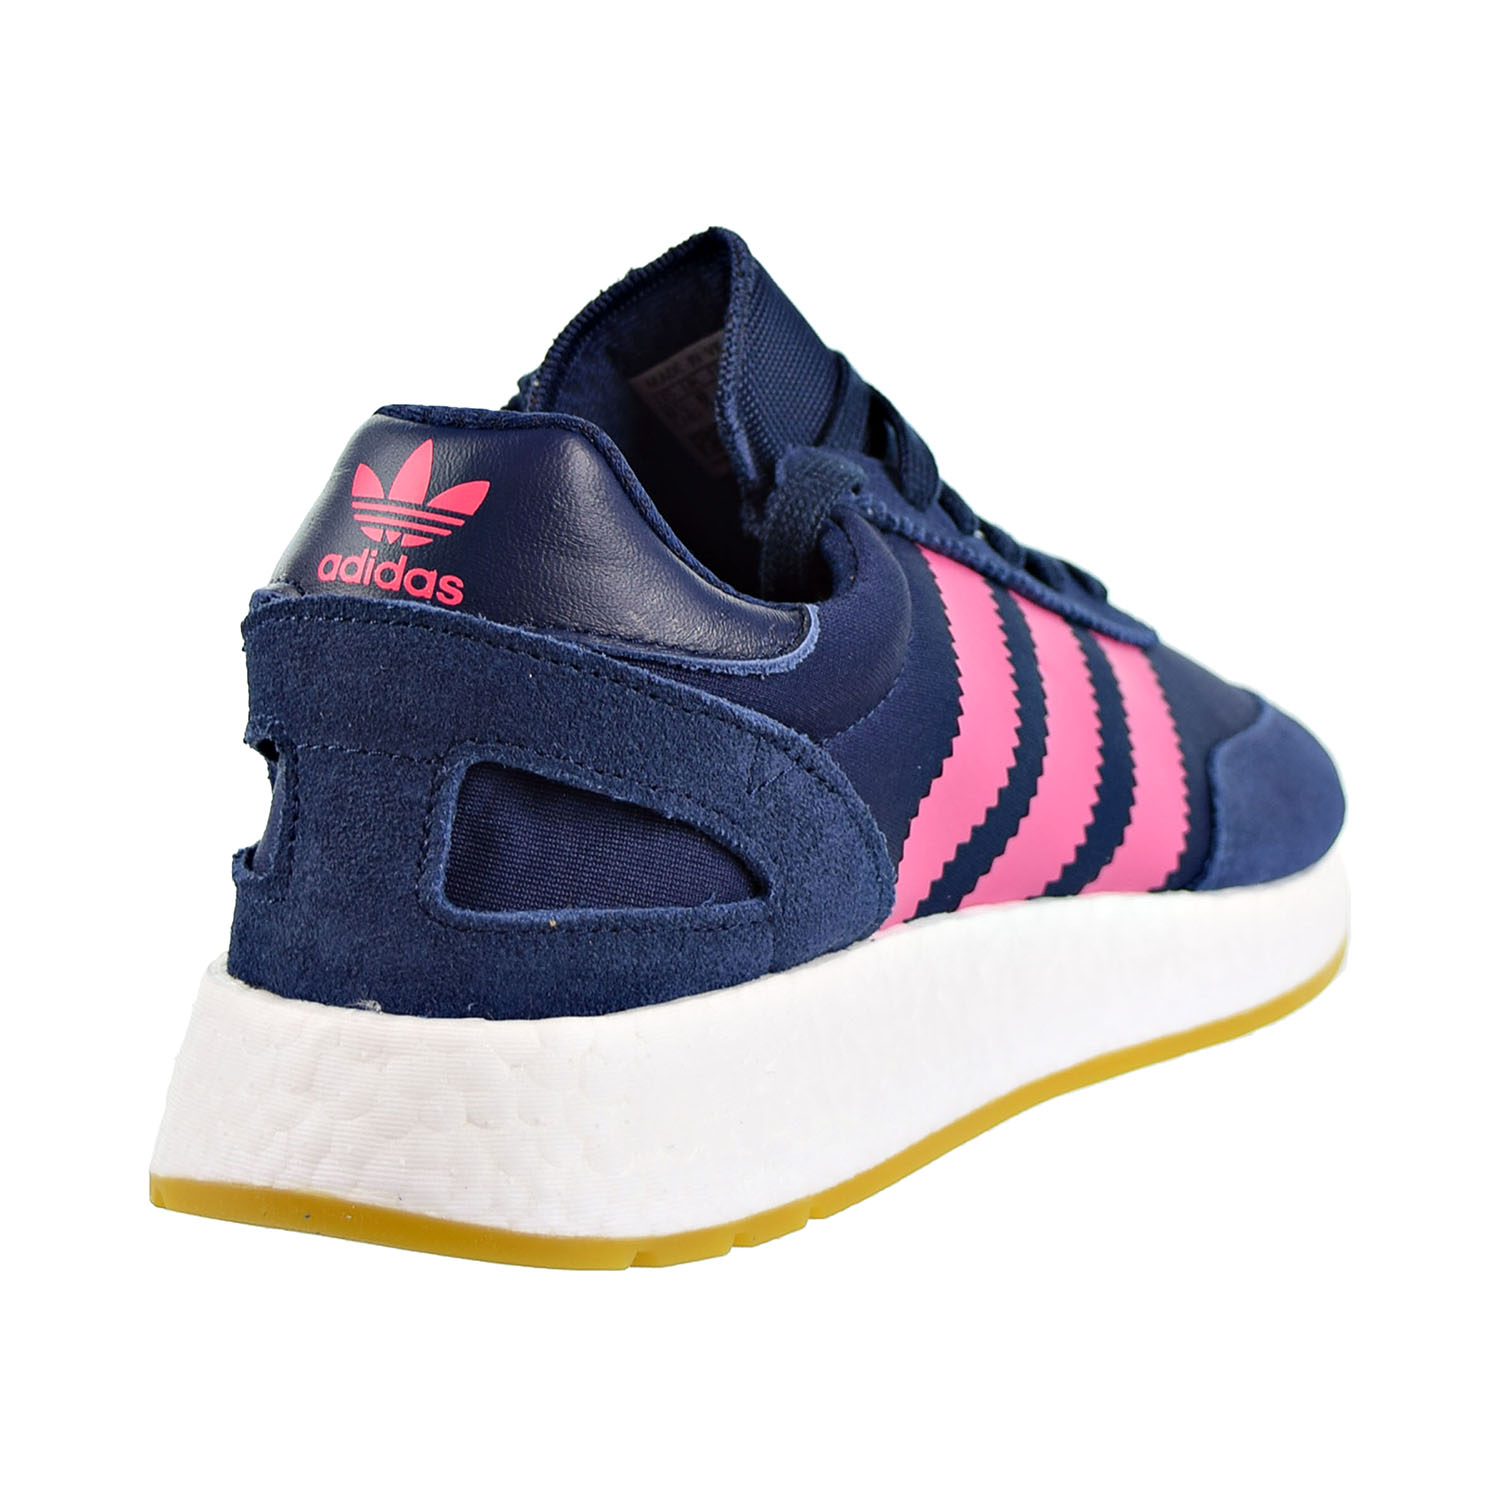 Adidas I-5923 Men's Shoes Night Indigo-Real Pink DB3012 | eBay